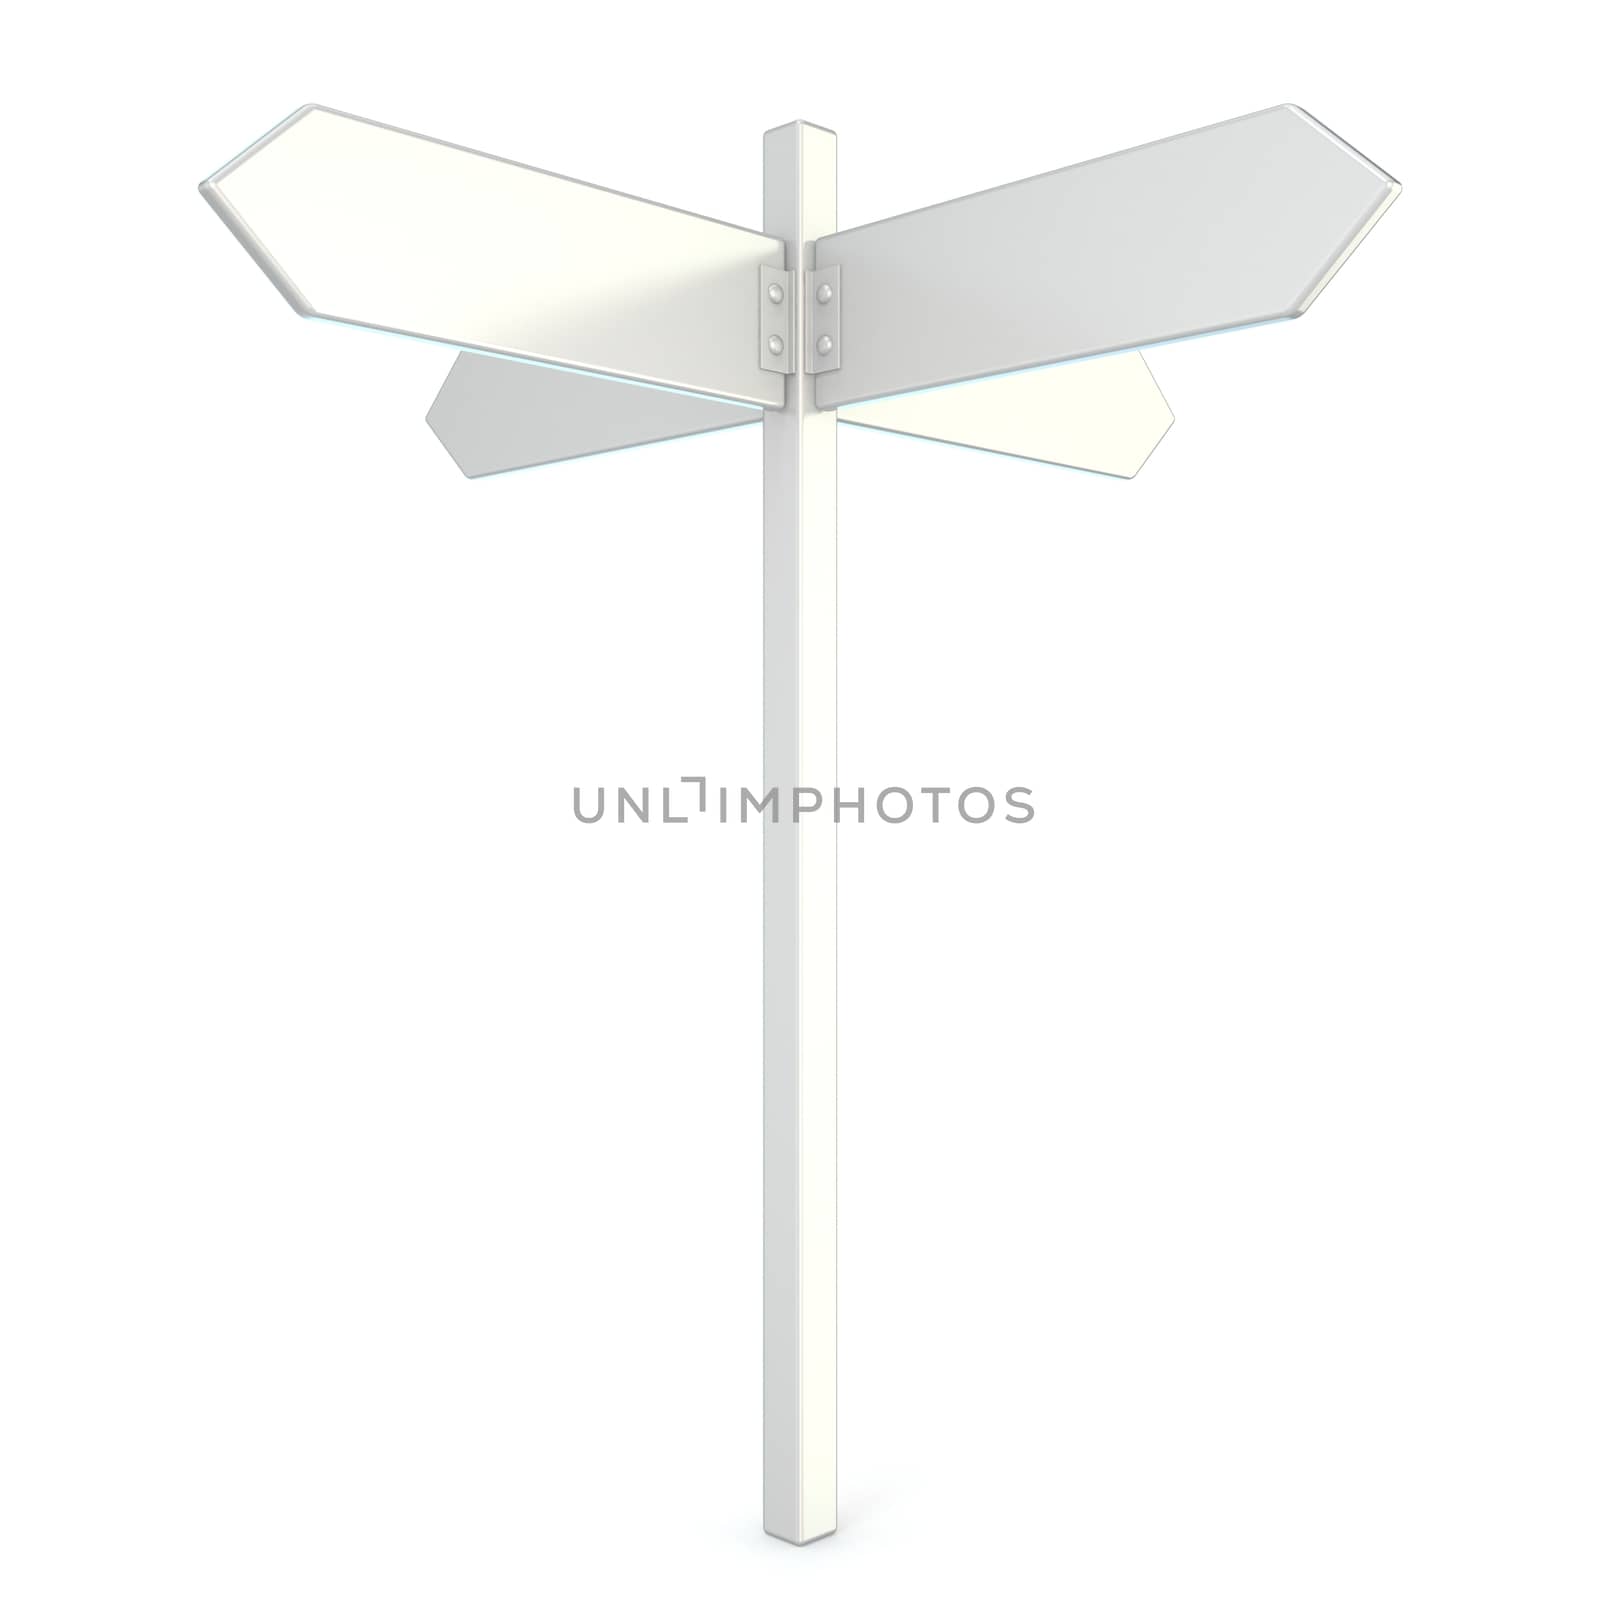 Blank, white signpost. 3D render illustration isolated on white background